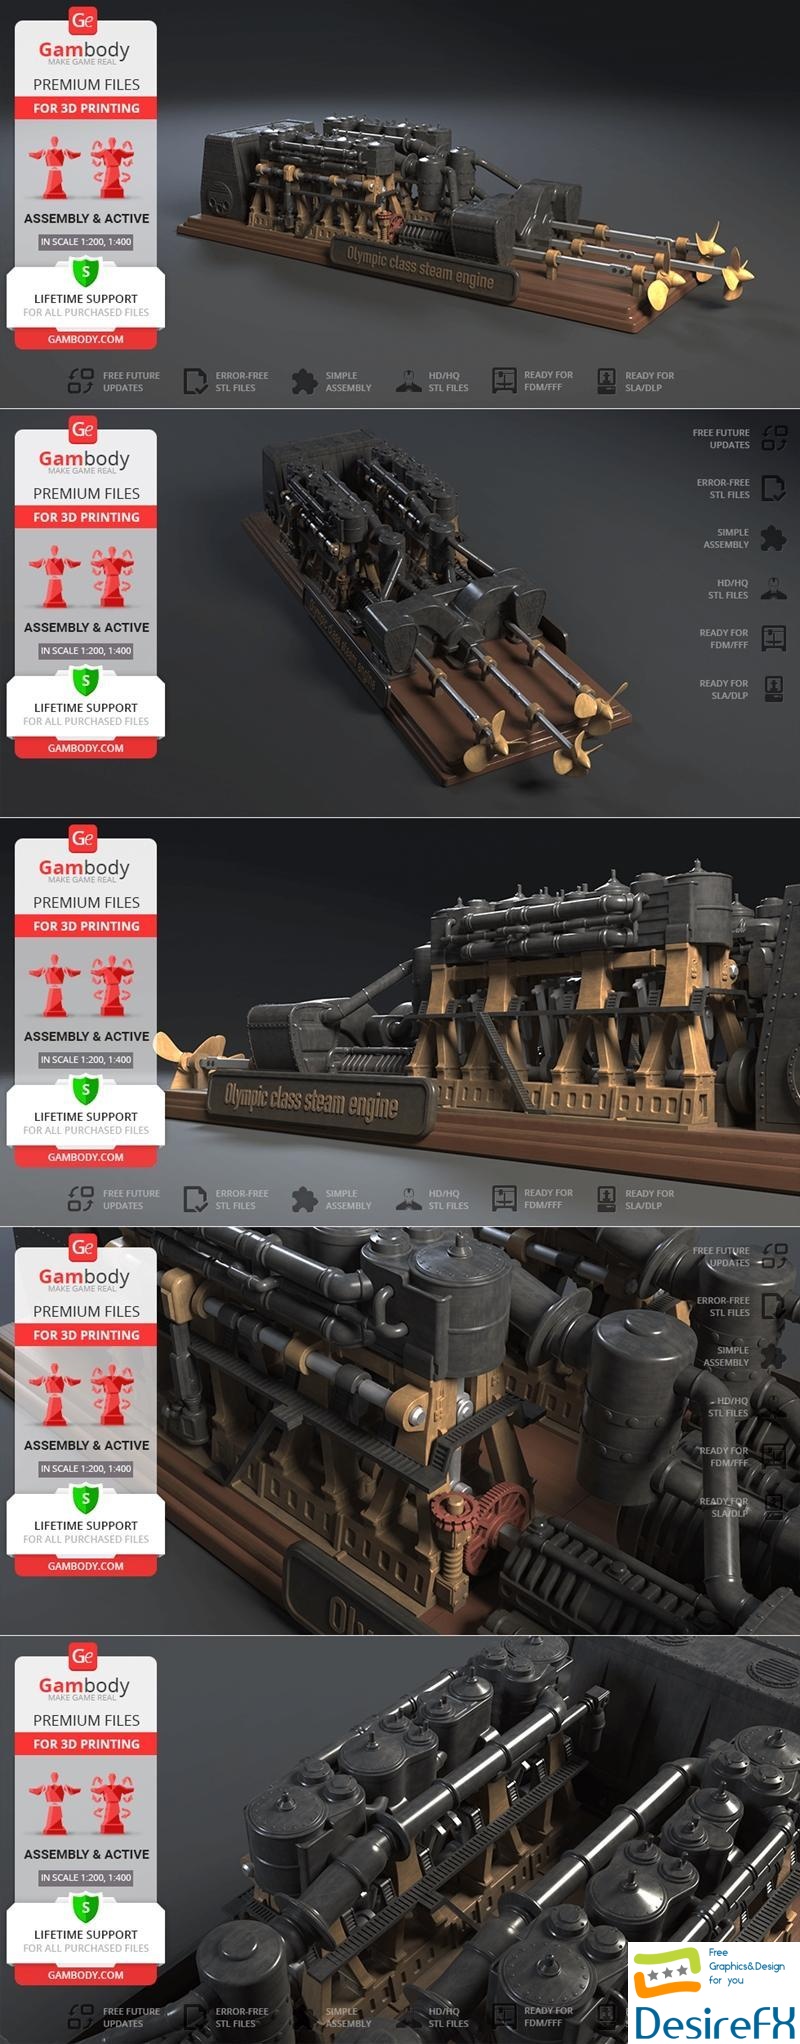 Gambody - Olympic Class Steam Engine 3D Print